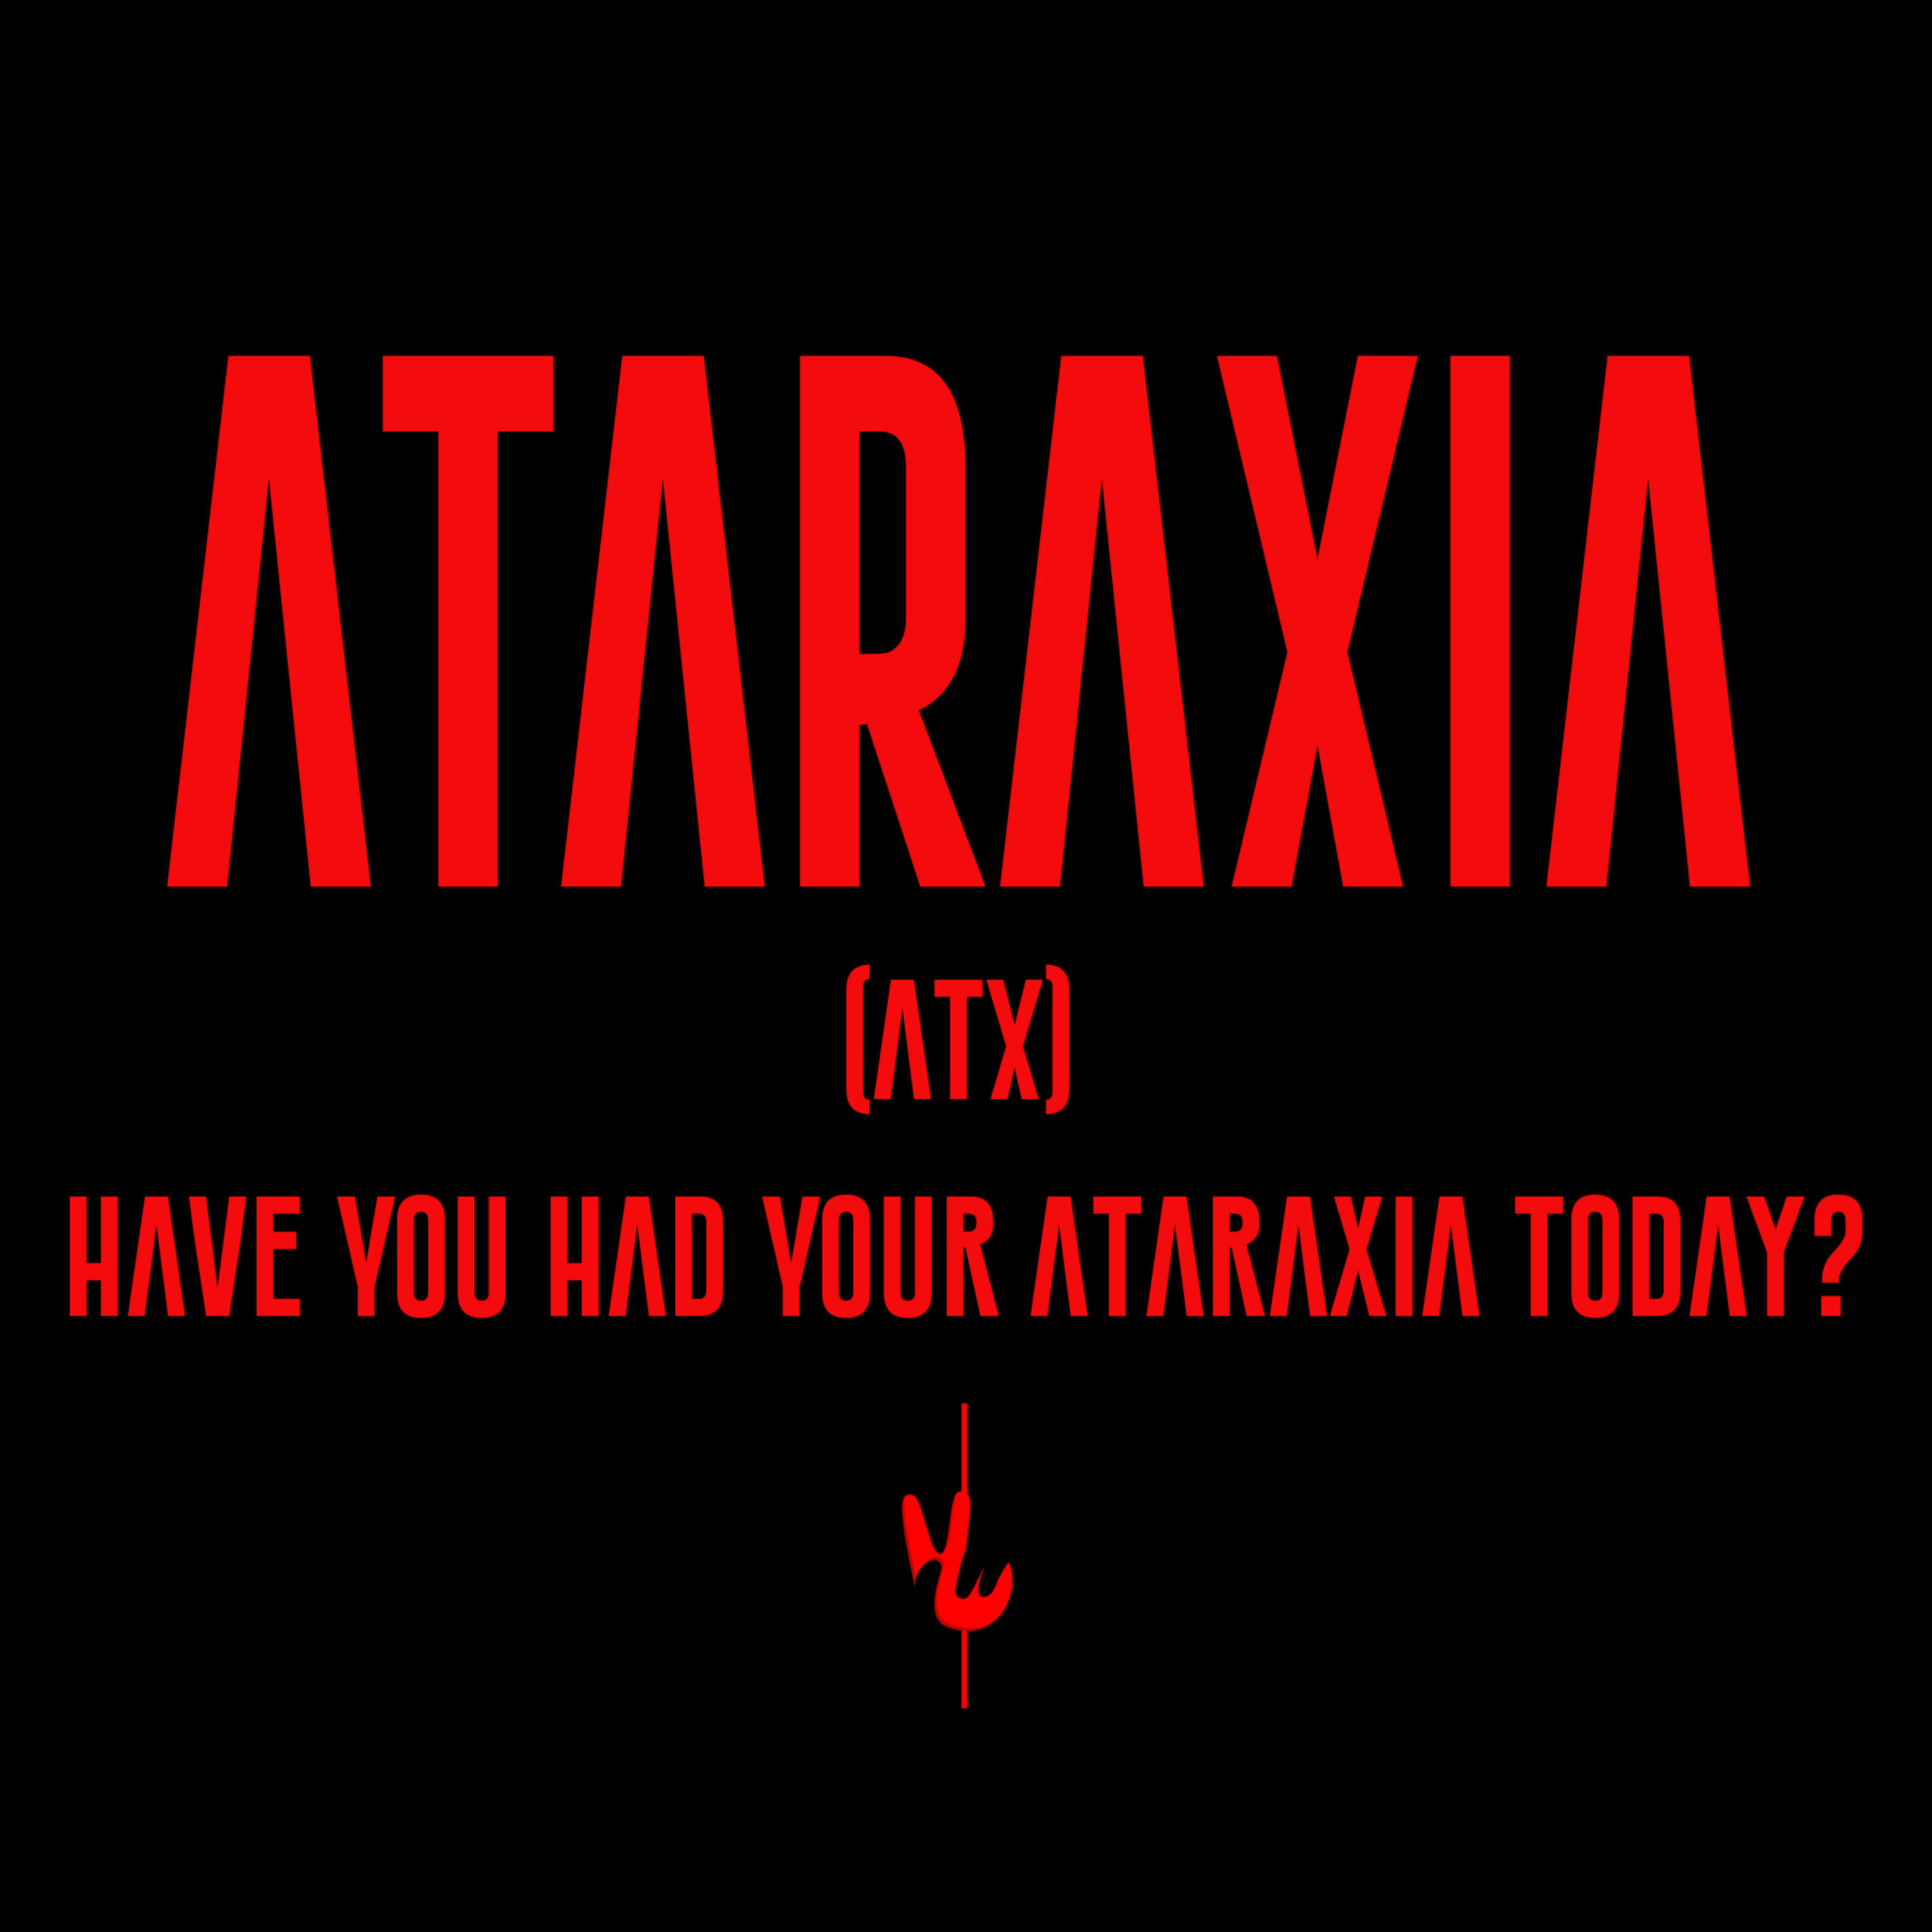 Artwork for Ataraxia